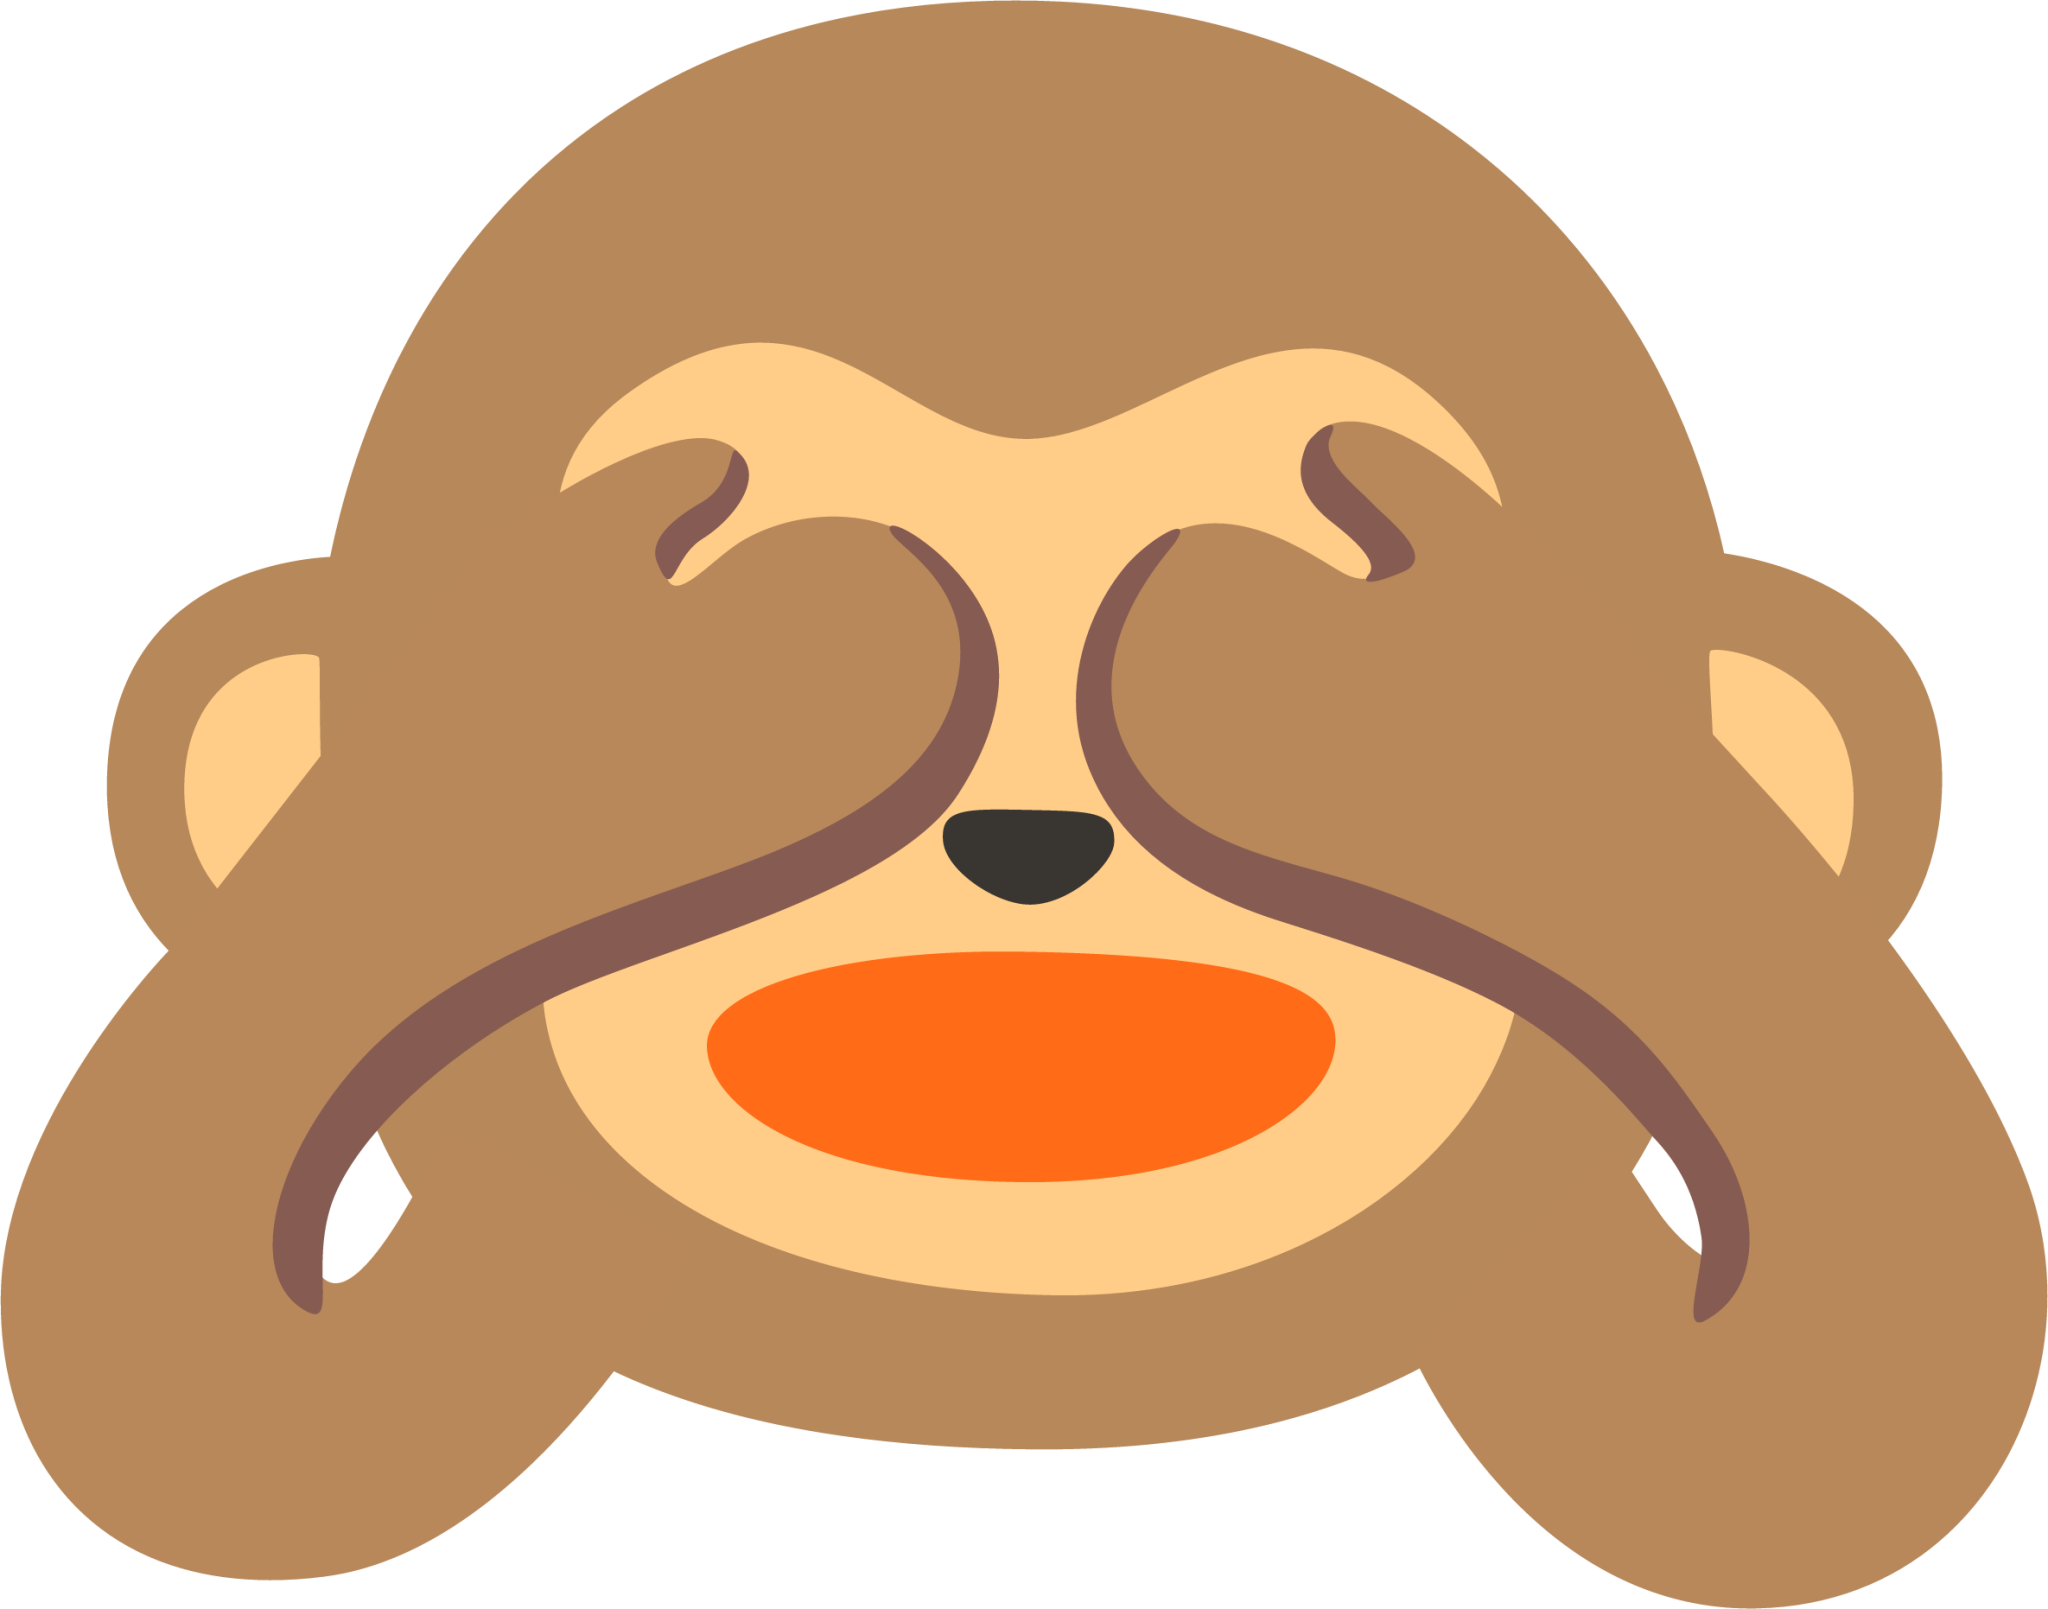 see-no-evil monkey emoji